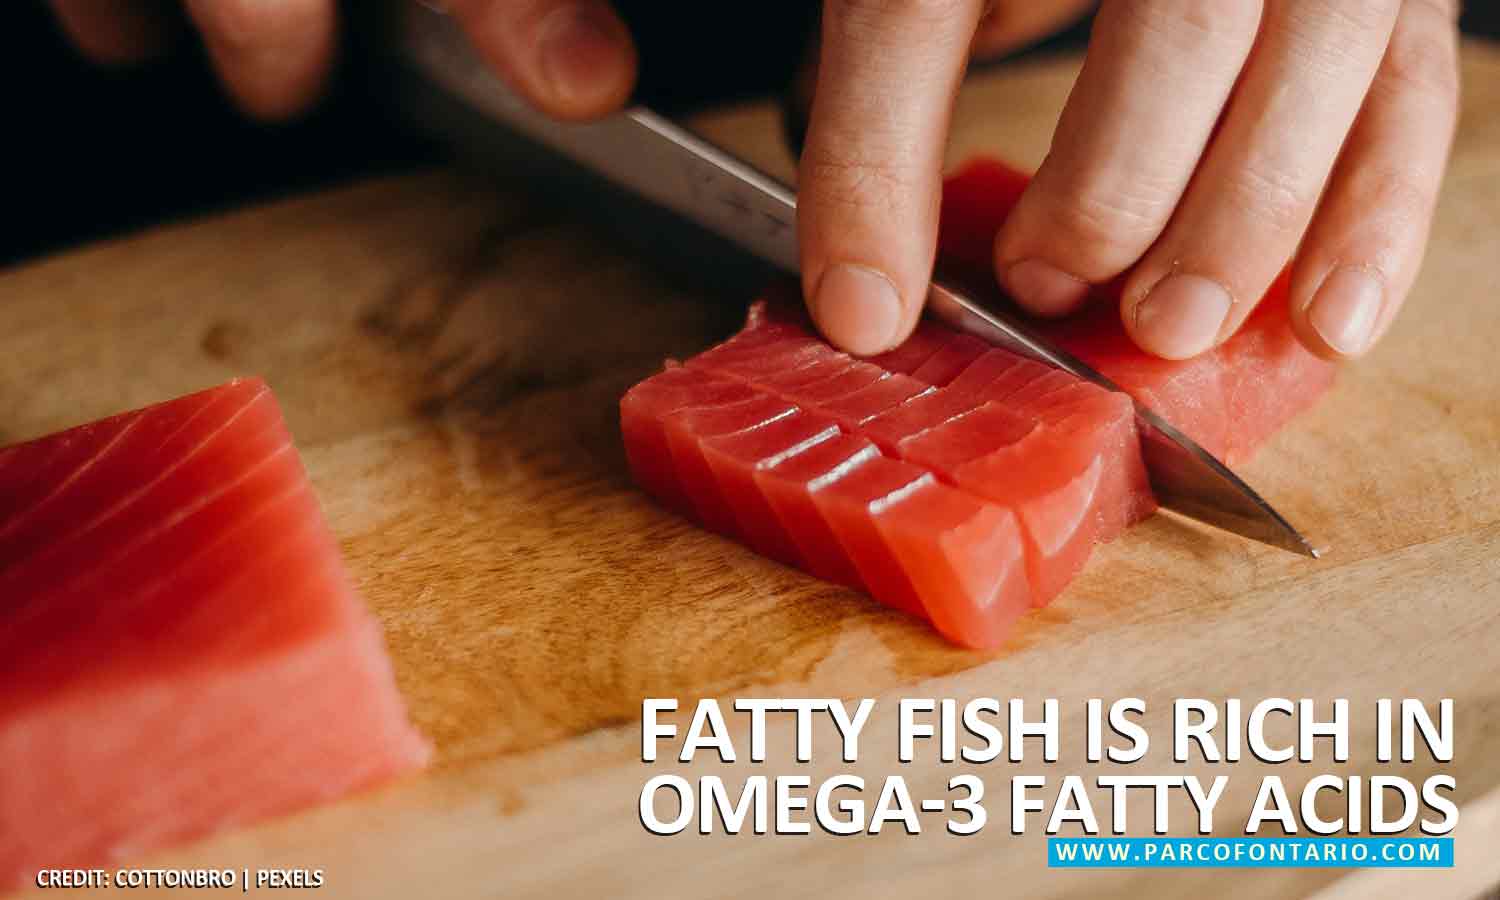 Fatty fish is rich in omega-3 fatty acids